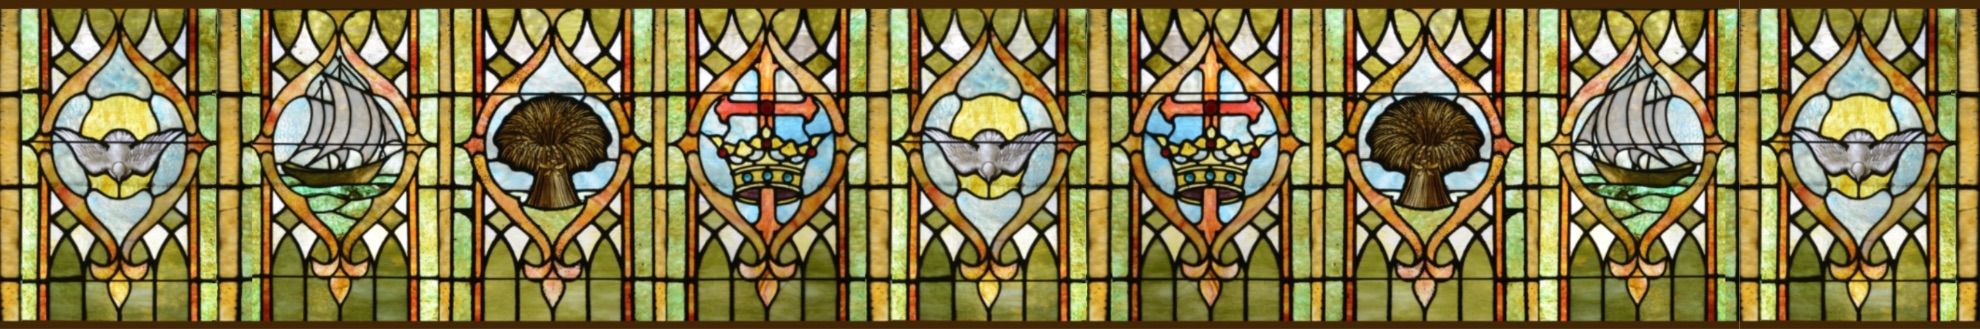 Stain glass windows of St Luke's